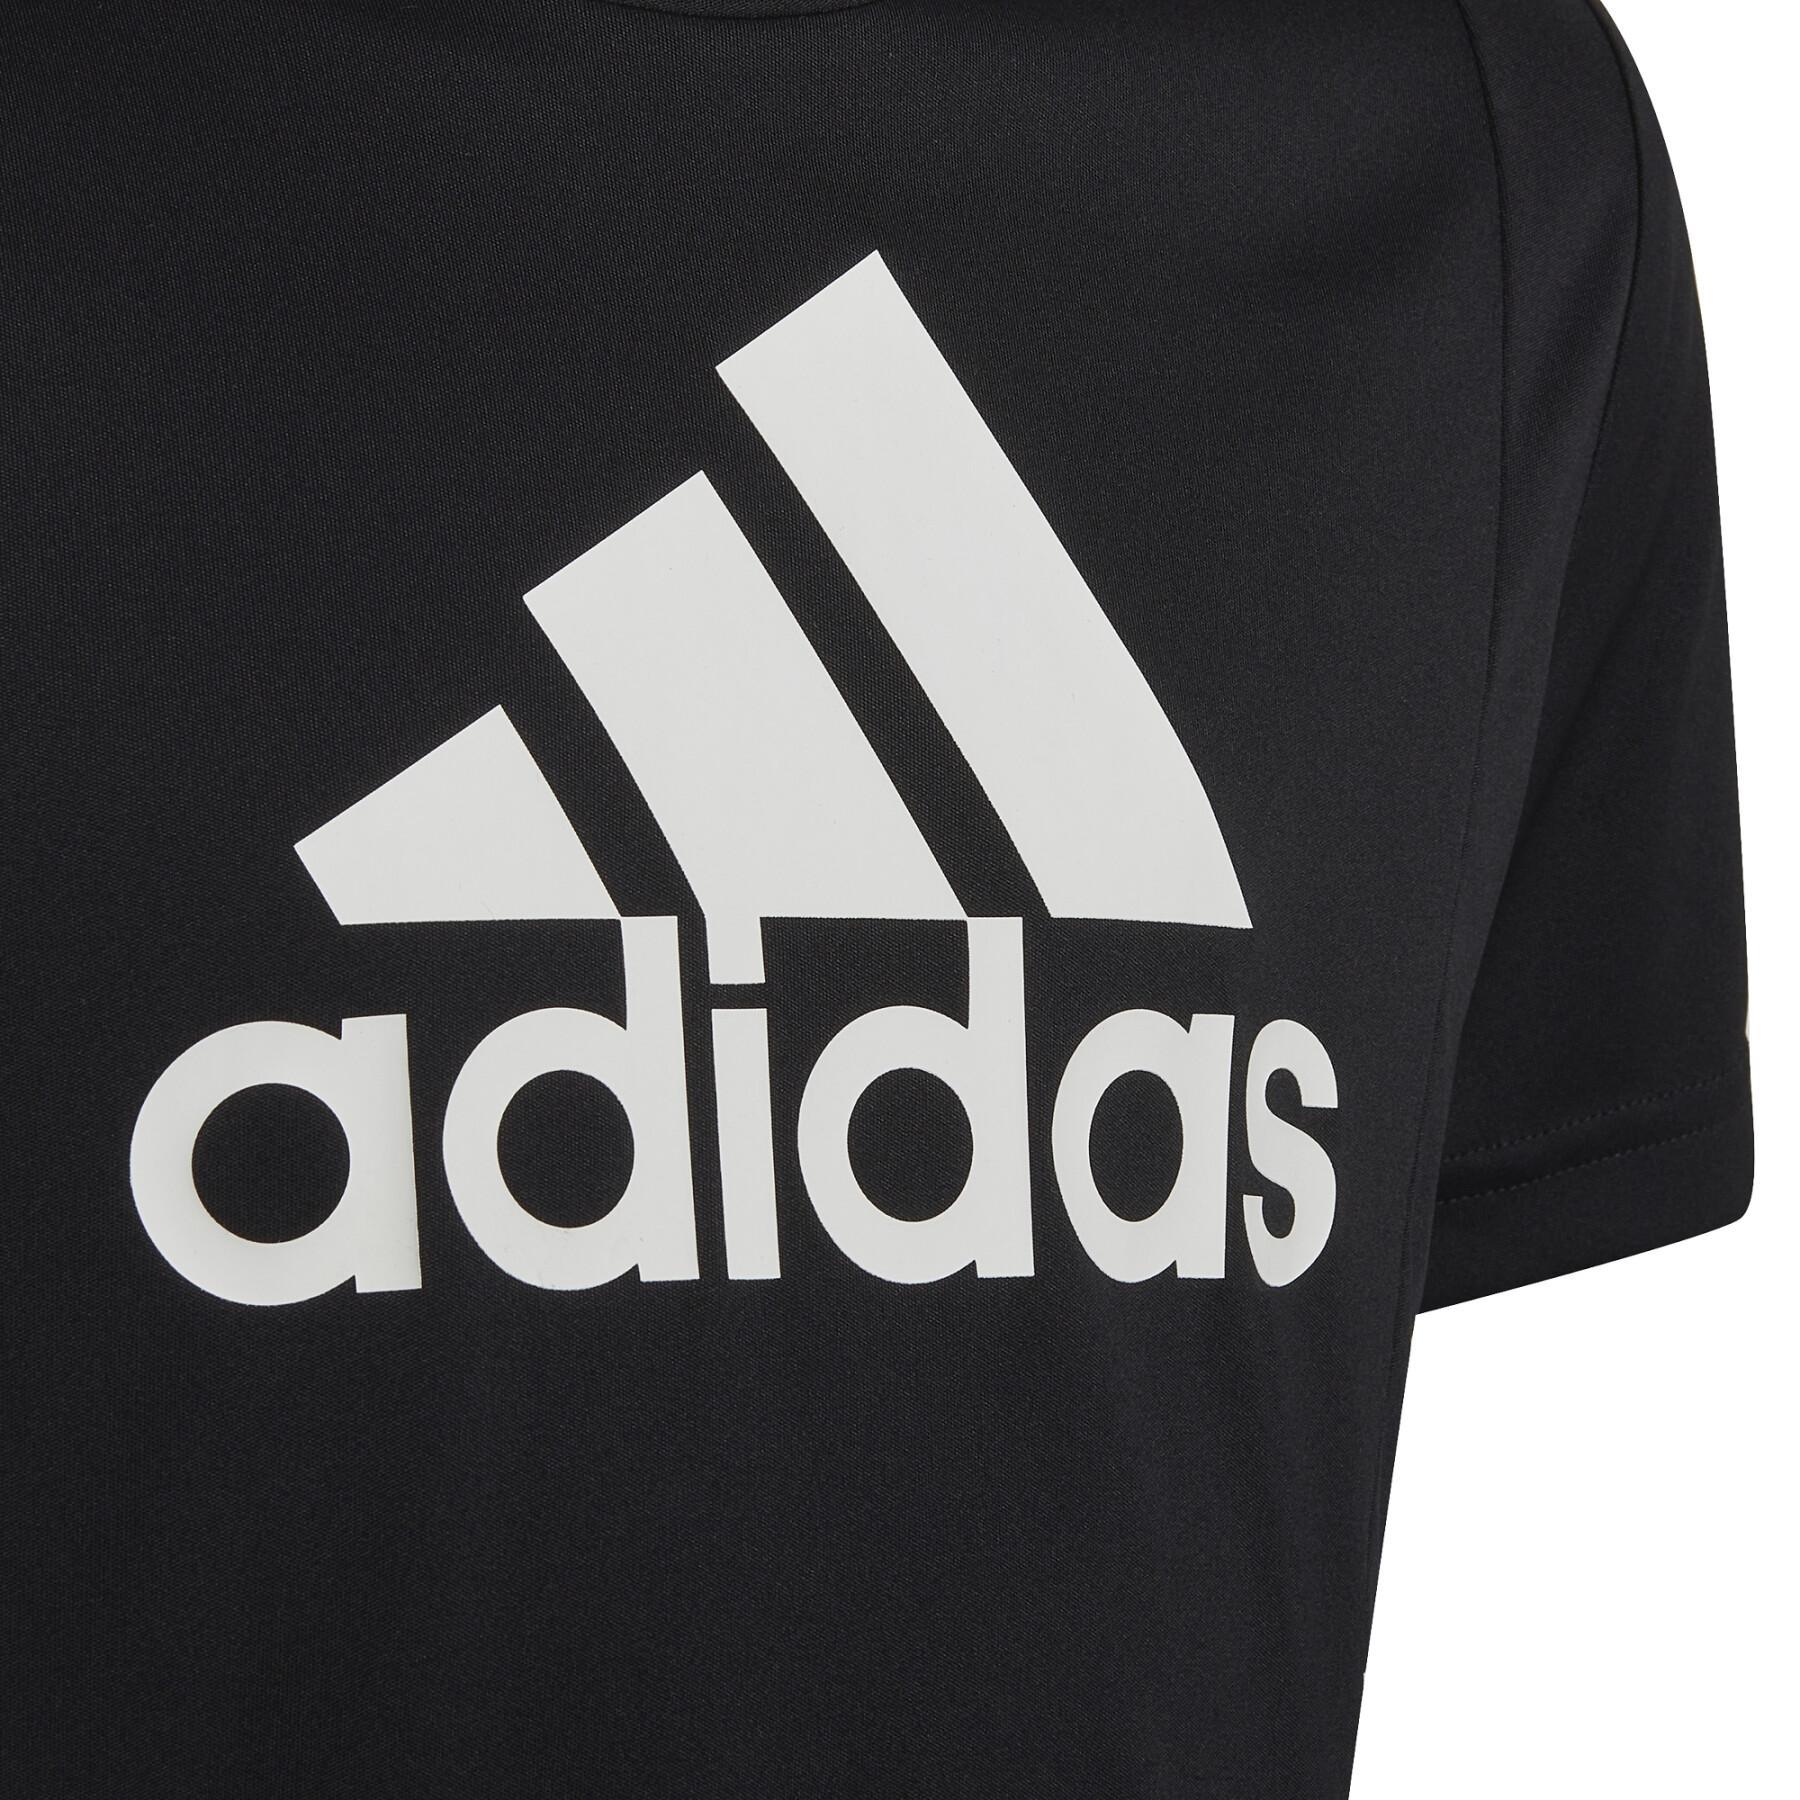 Koszulka dziecięca adidas D2m Big Logo